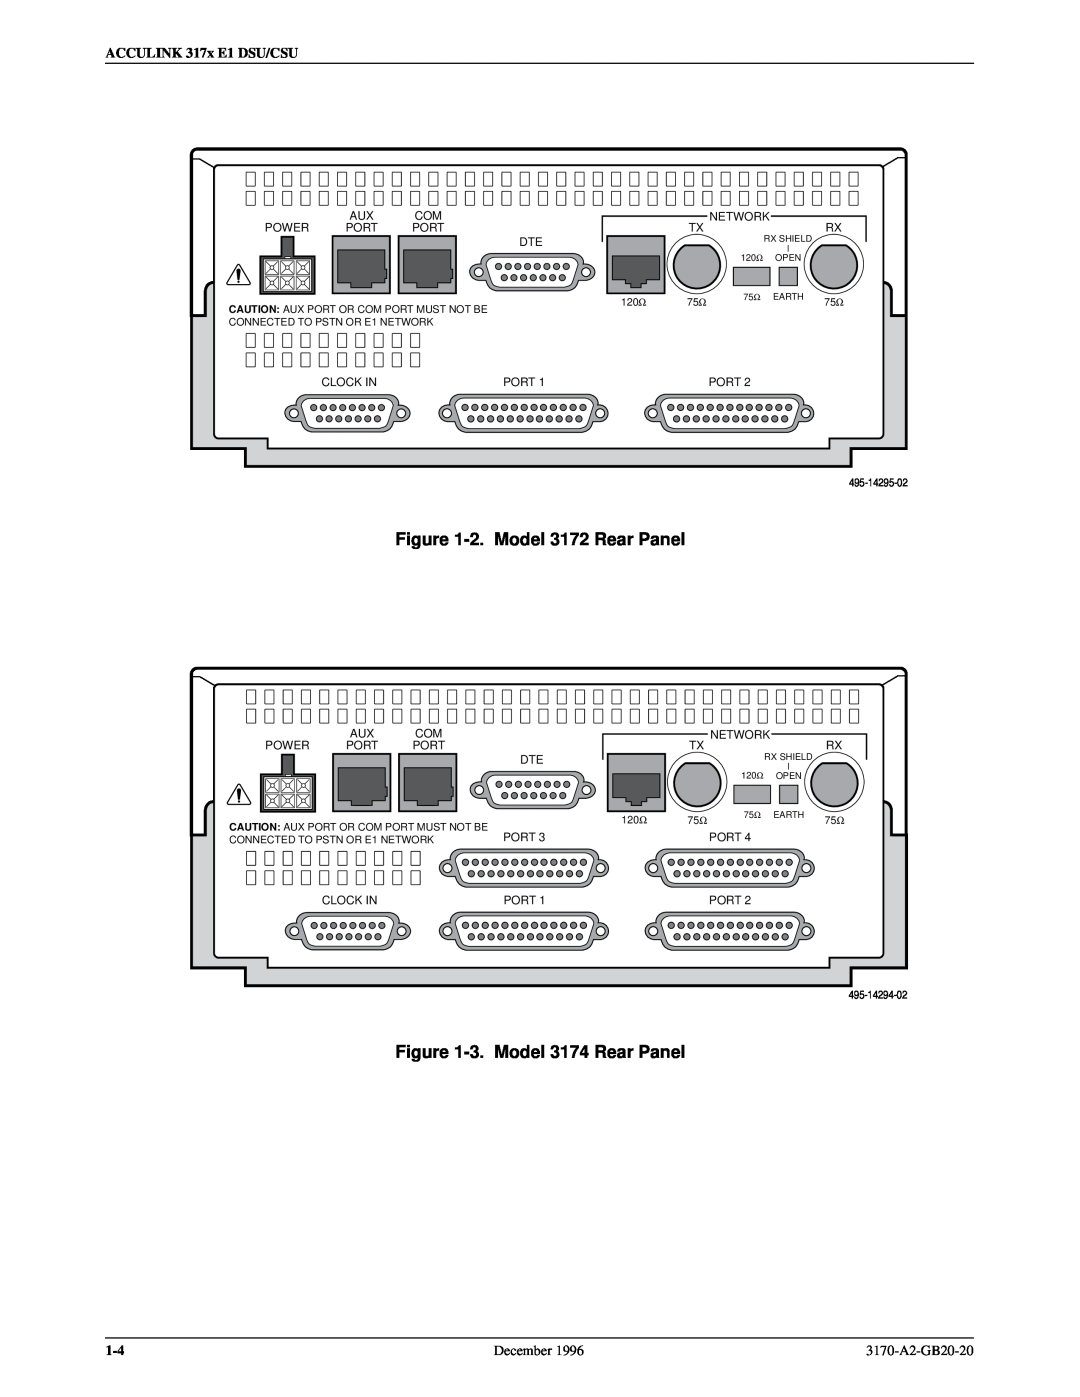 Paradyne manual 2. Model 3172 Rear Panel, 3. Model 3174 Rear Panel, ACCULINK 317x E1 DSU/CSU, December, 3170-A2-GB20-20 